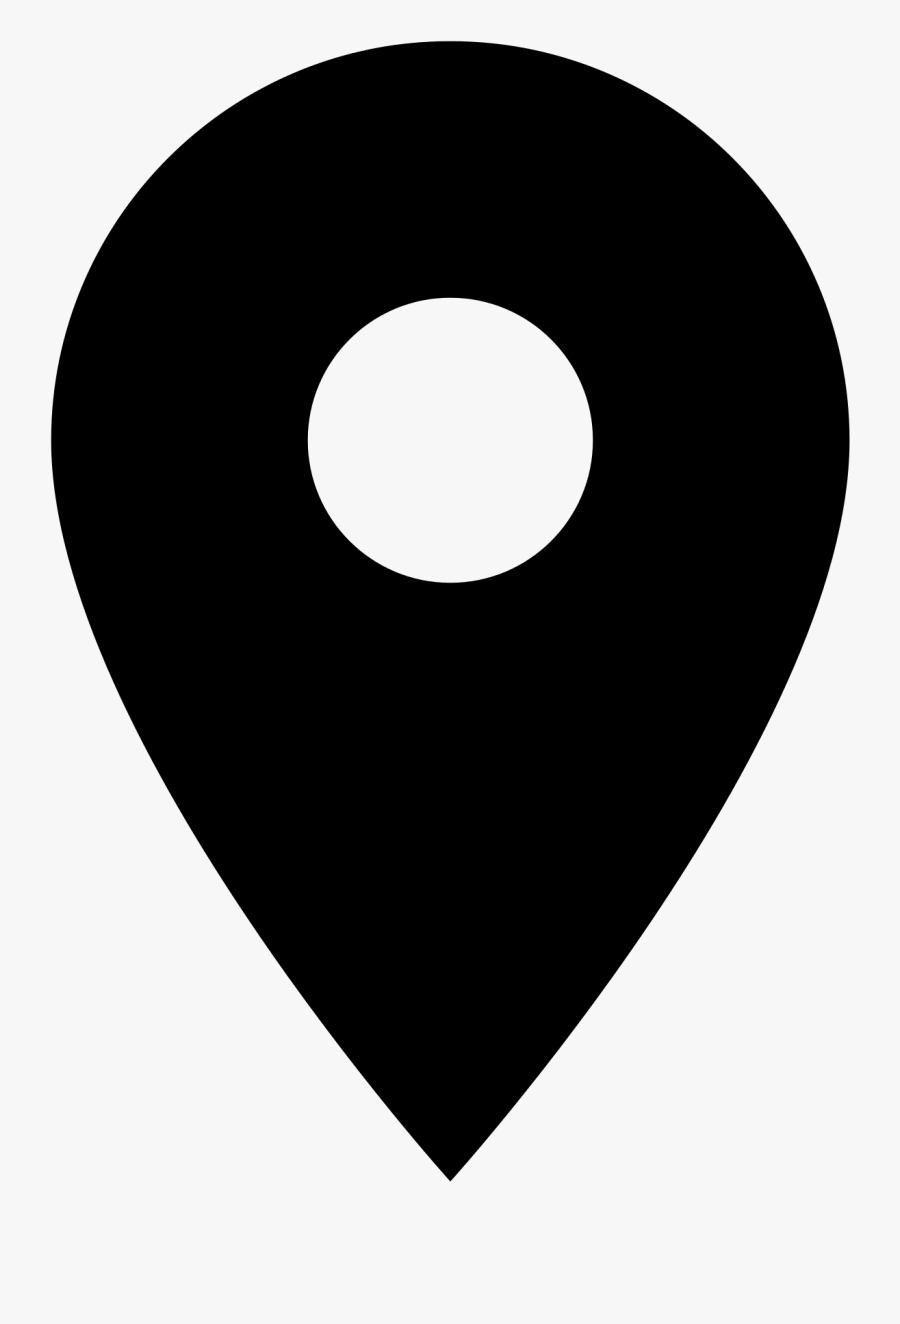 179 1791194 Map Marker Pin Icon Symbol Vector Black Location 